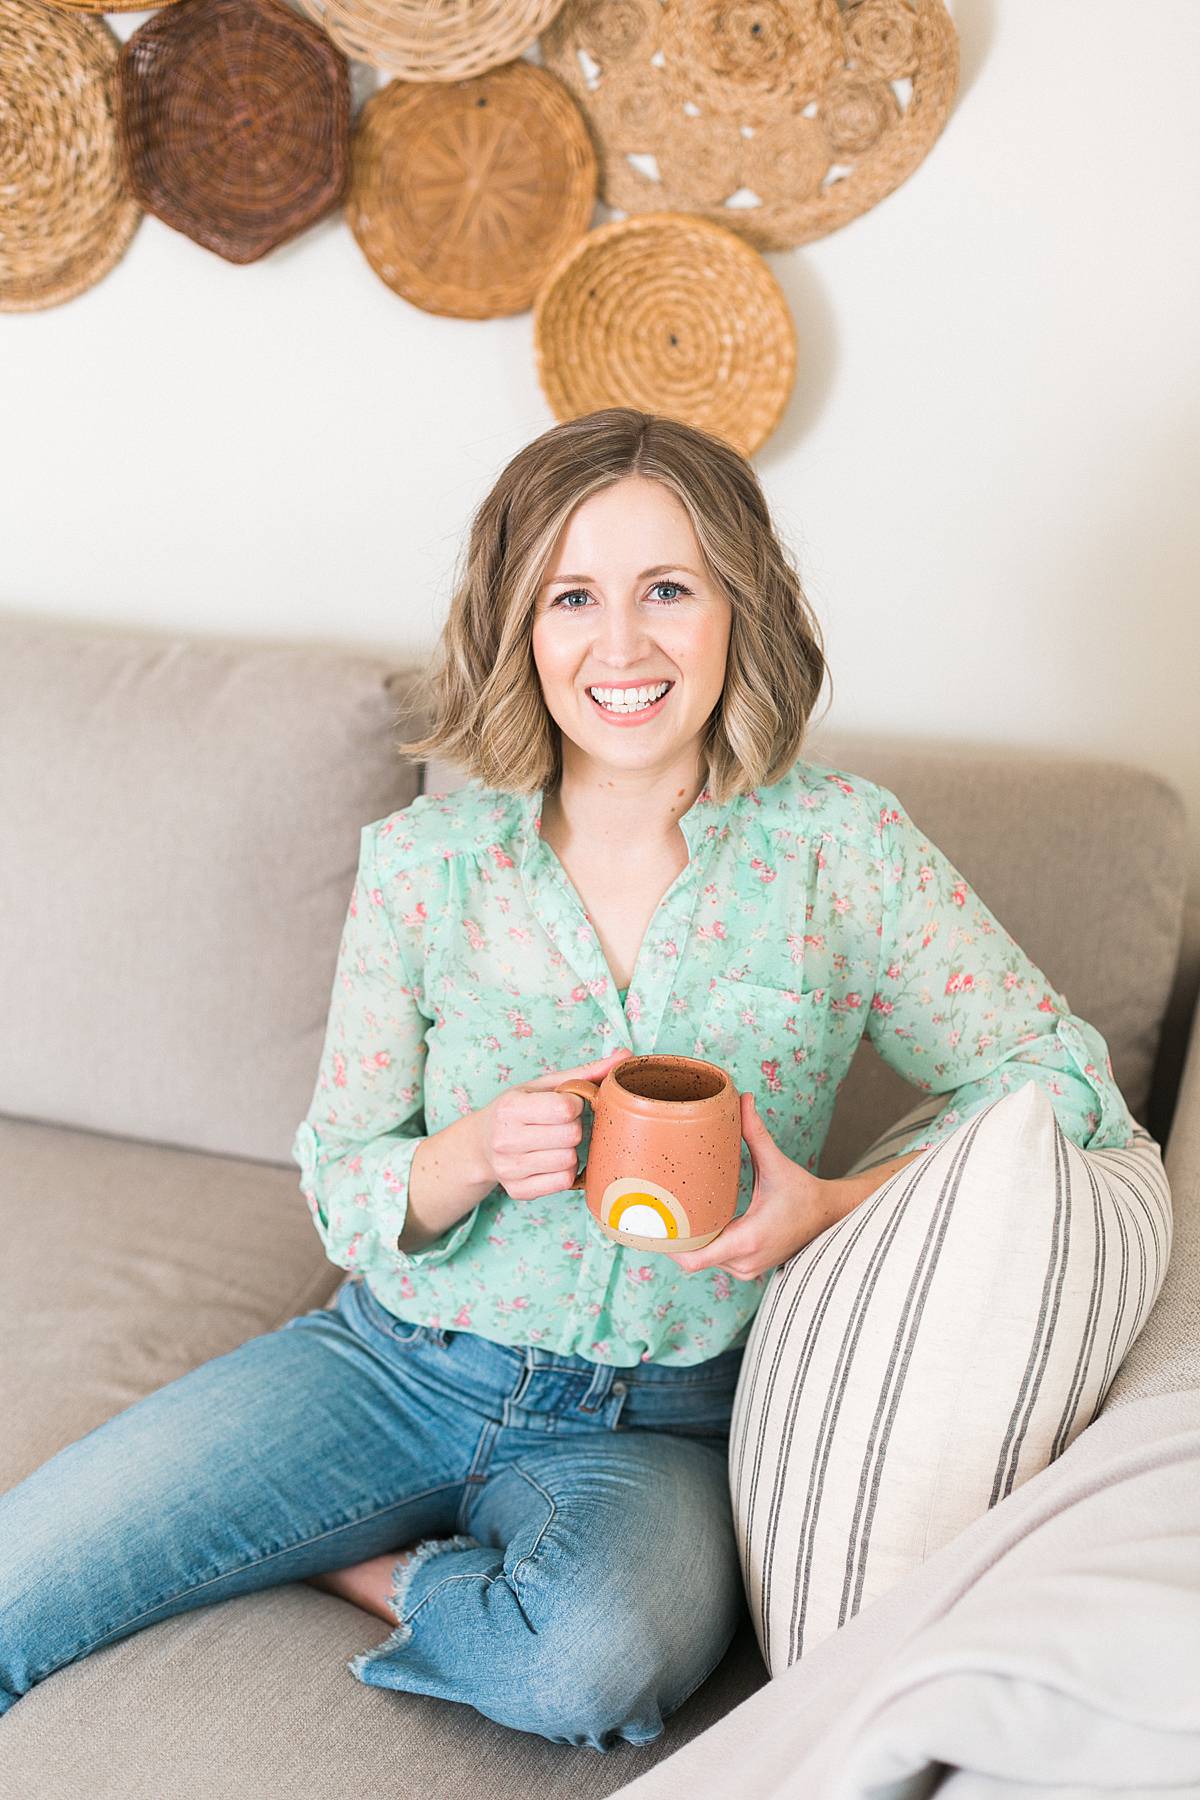 milwaukee wellness and organic beauty blogger branding headshot with coffee mug